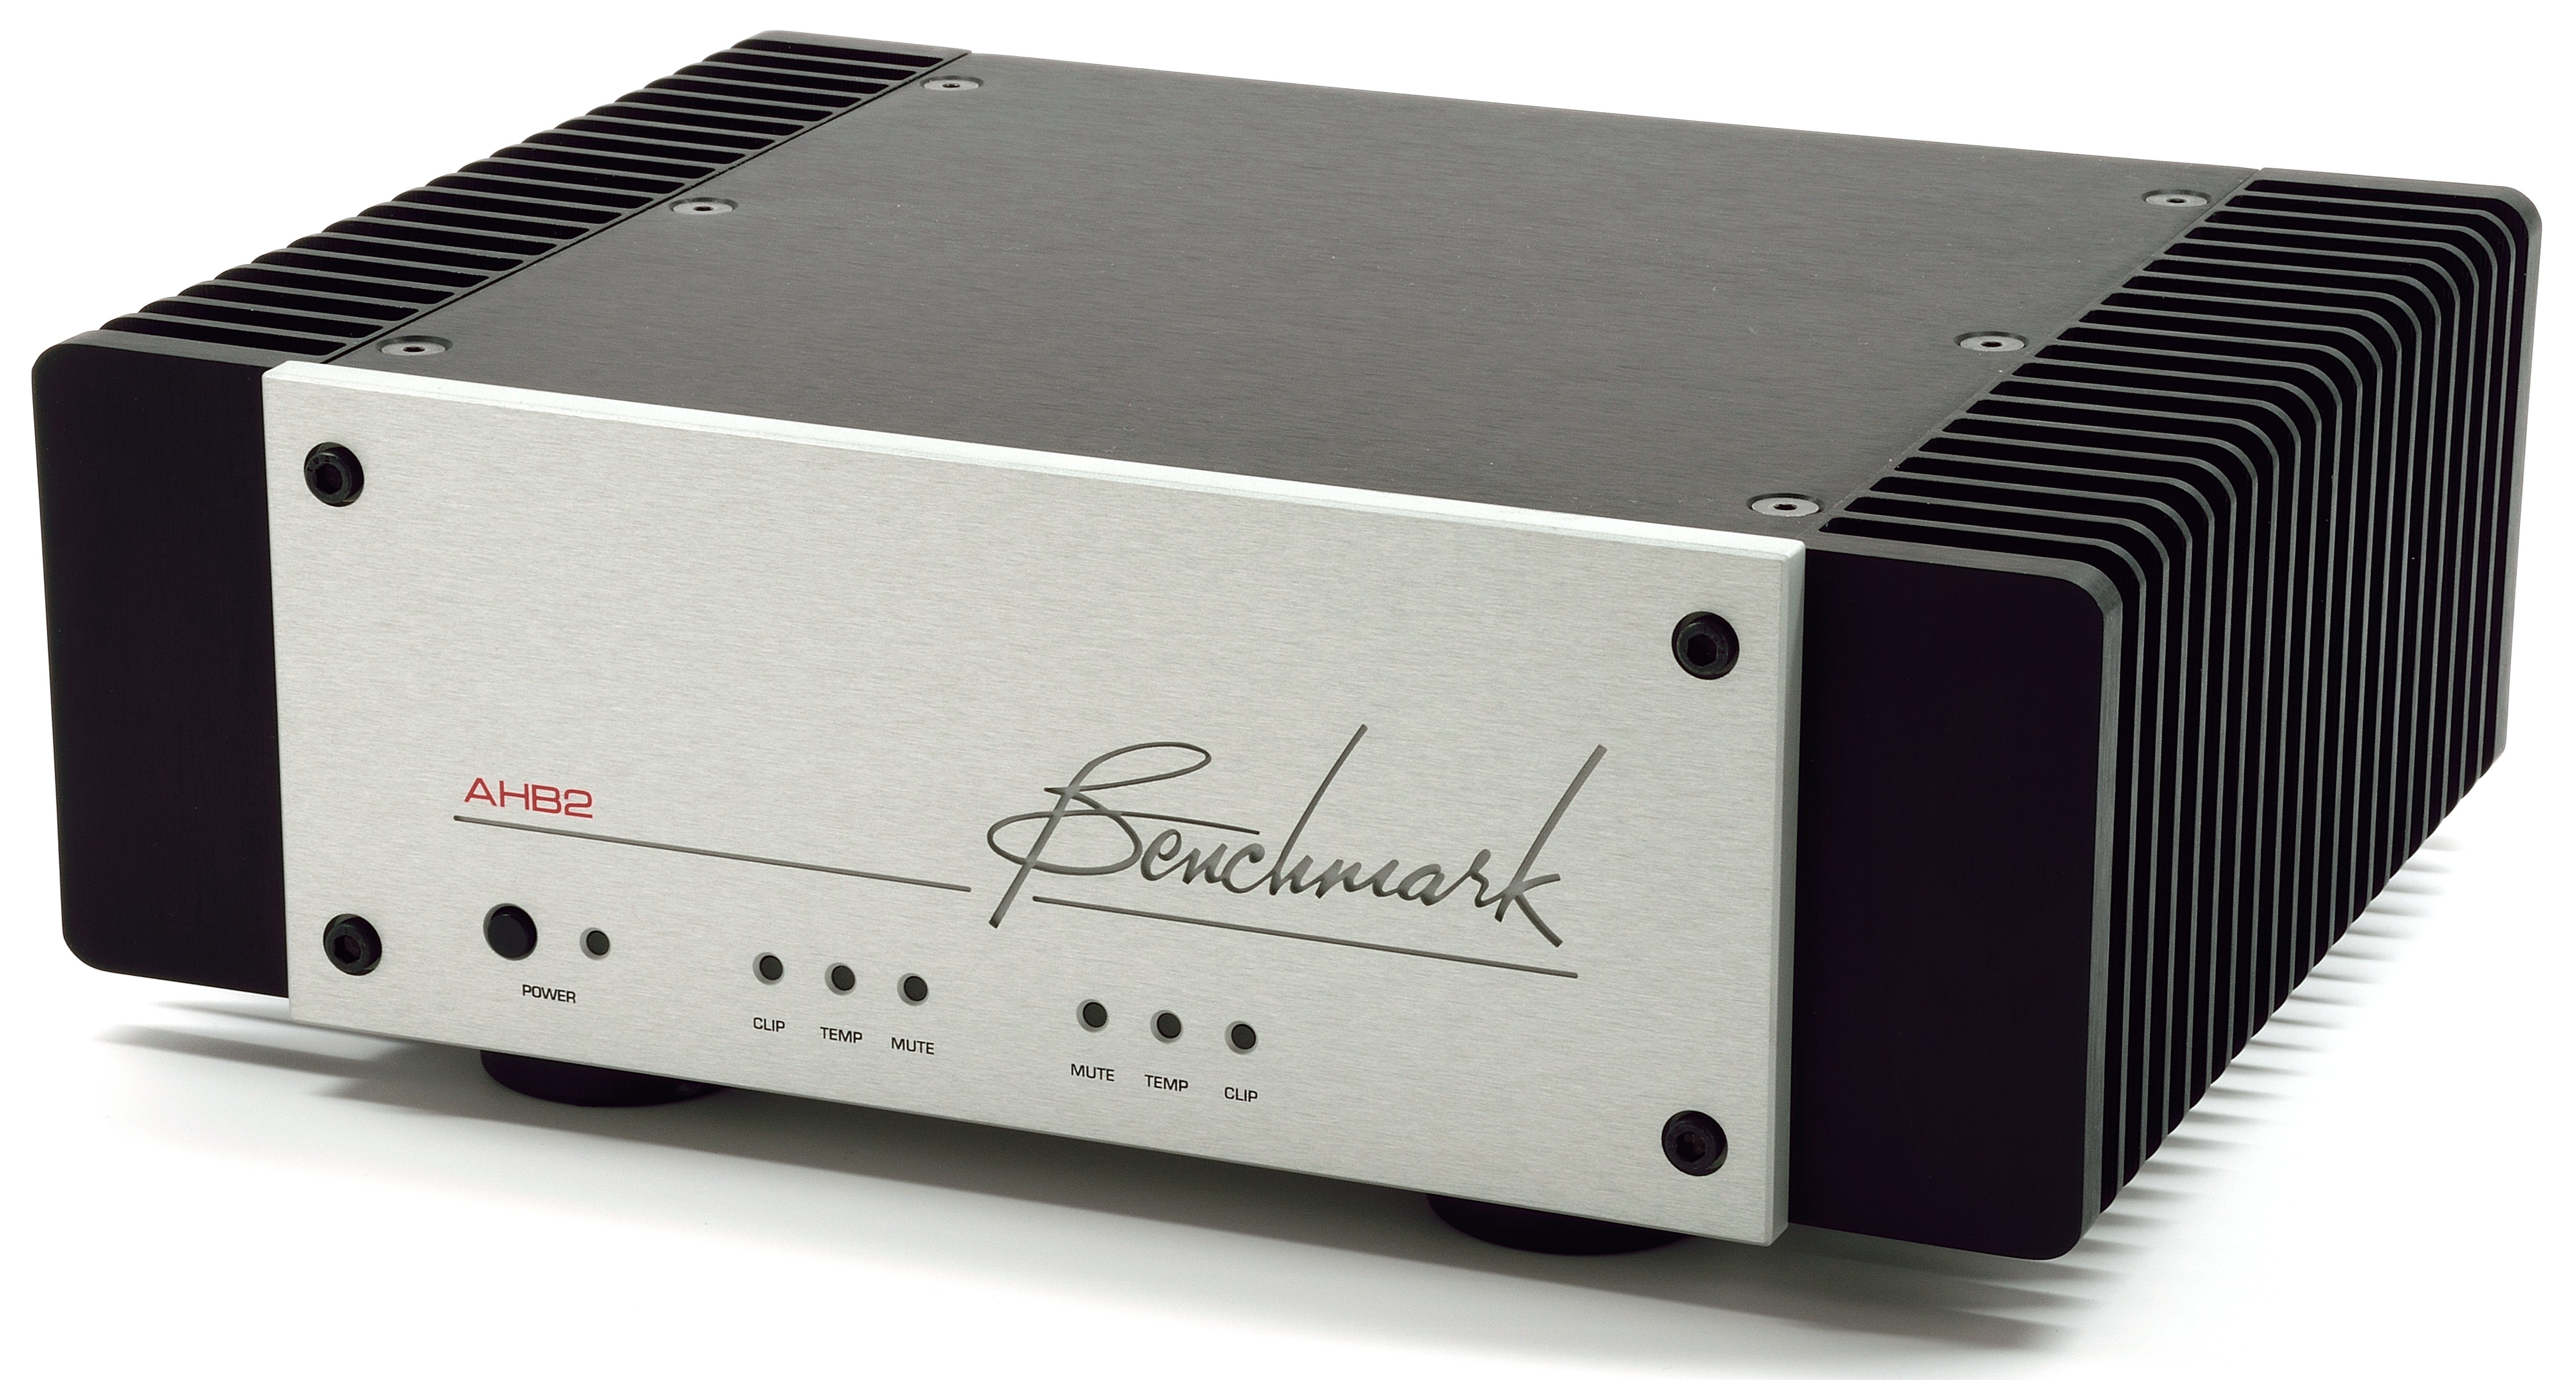 Benchmark AHB2 Audio Power Amplifier